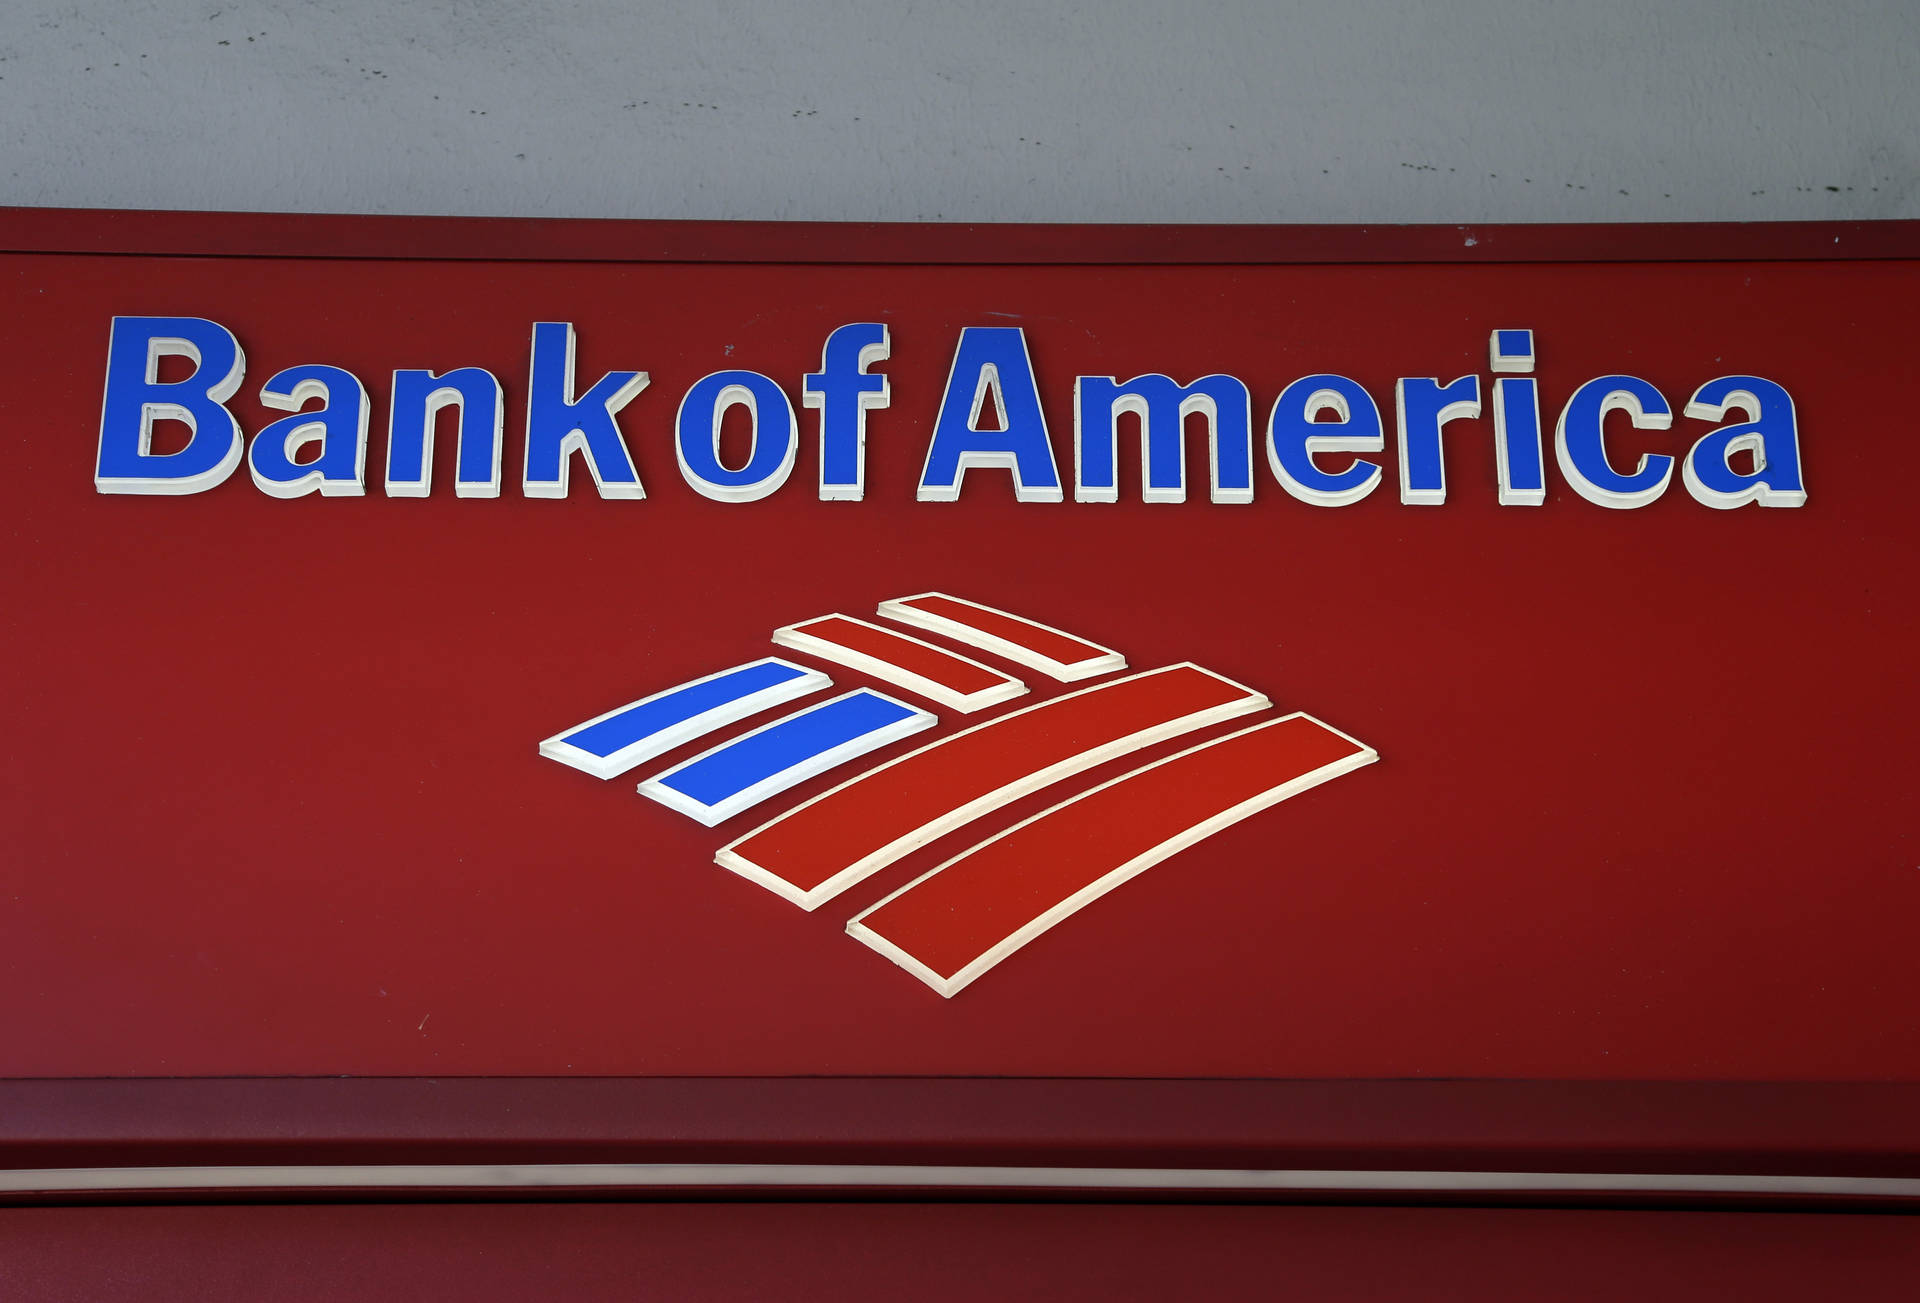 Bank Of America Red Acrylic Signage Background